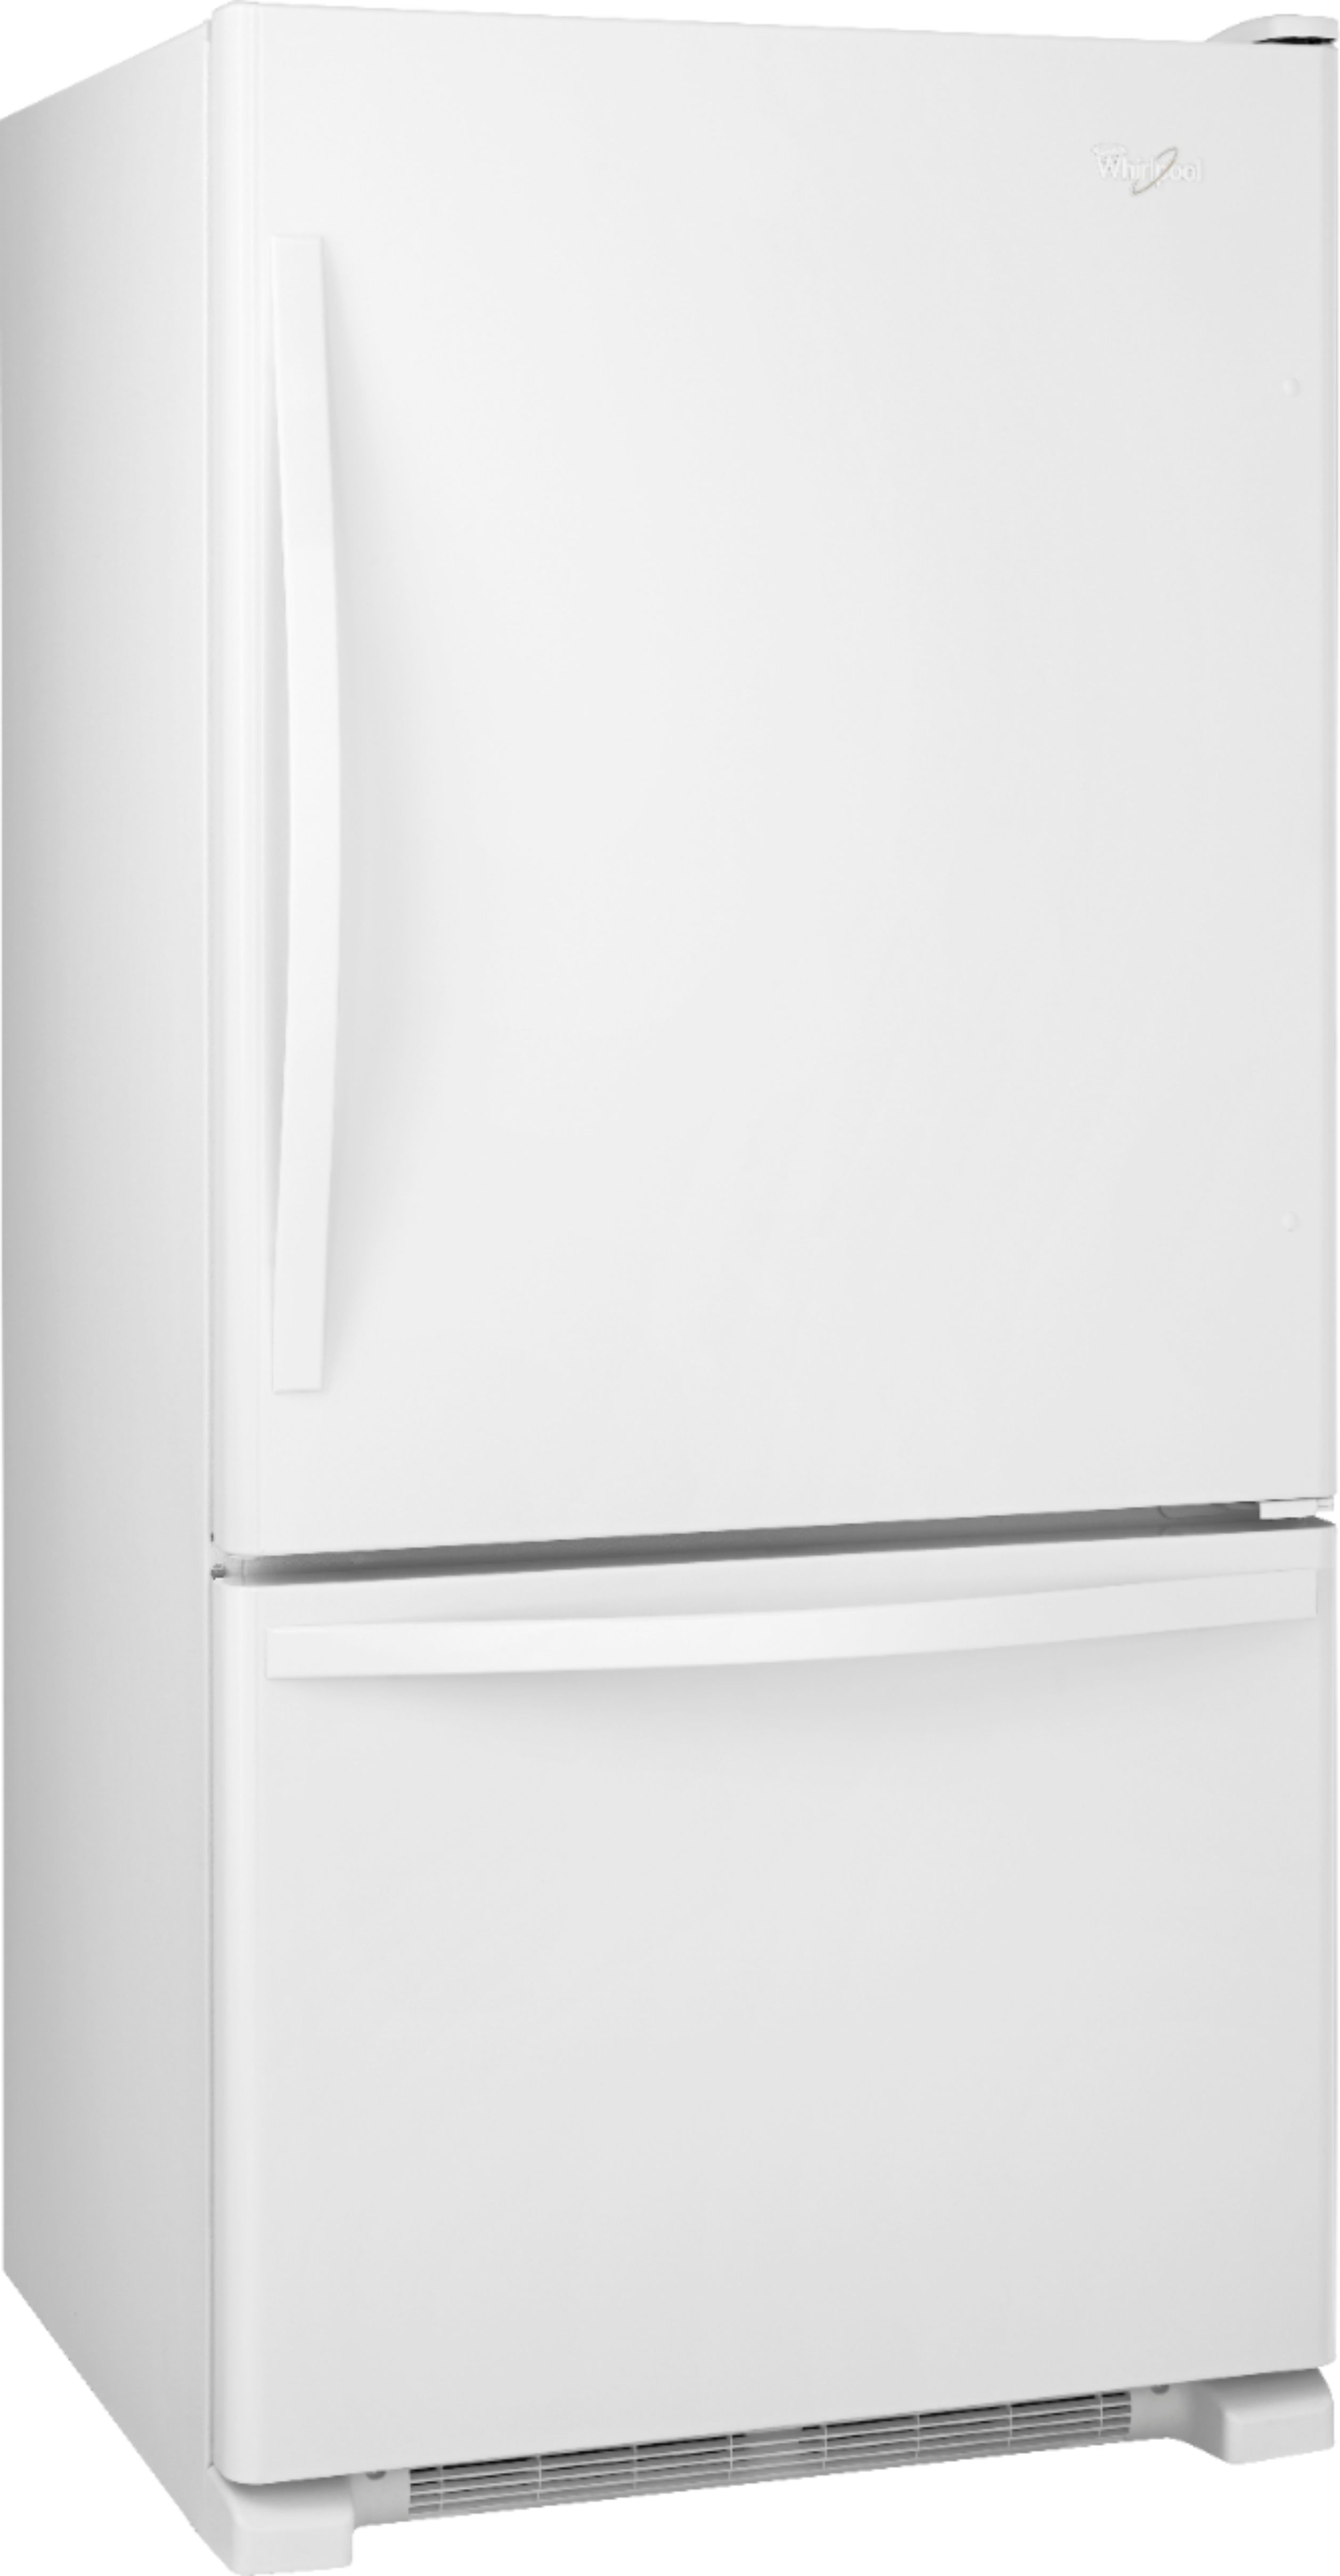 Angle View: Whirlpool - 22 Cu. Ft. Bottom-Freezer Refrigerator with SpillGuard Glass Shelves - White